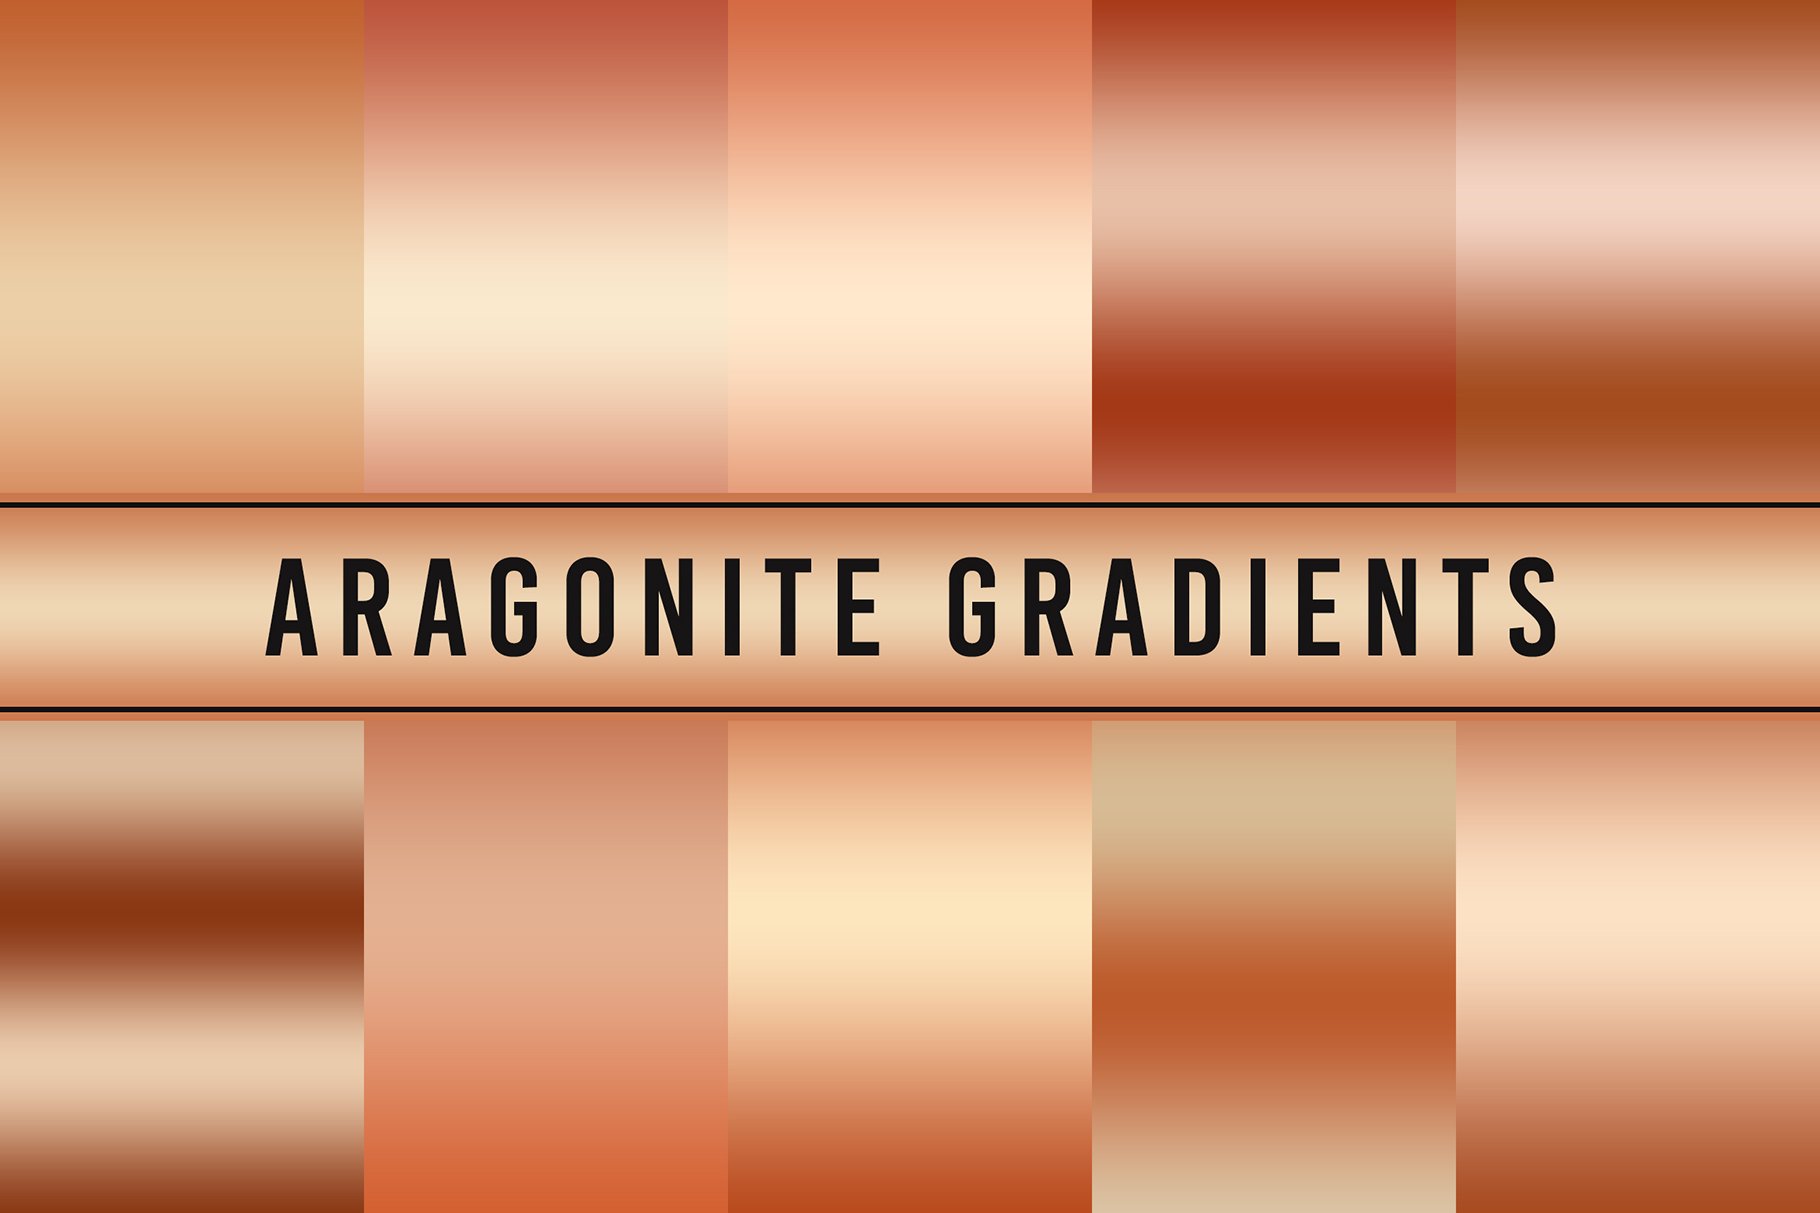 Aragonite Gradients cover image.